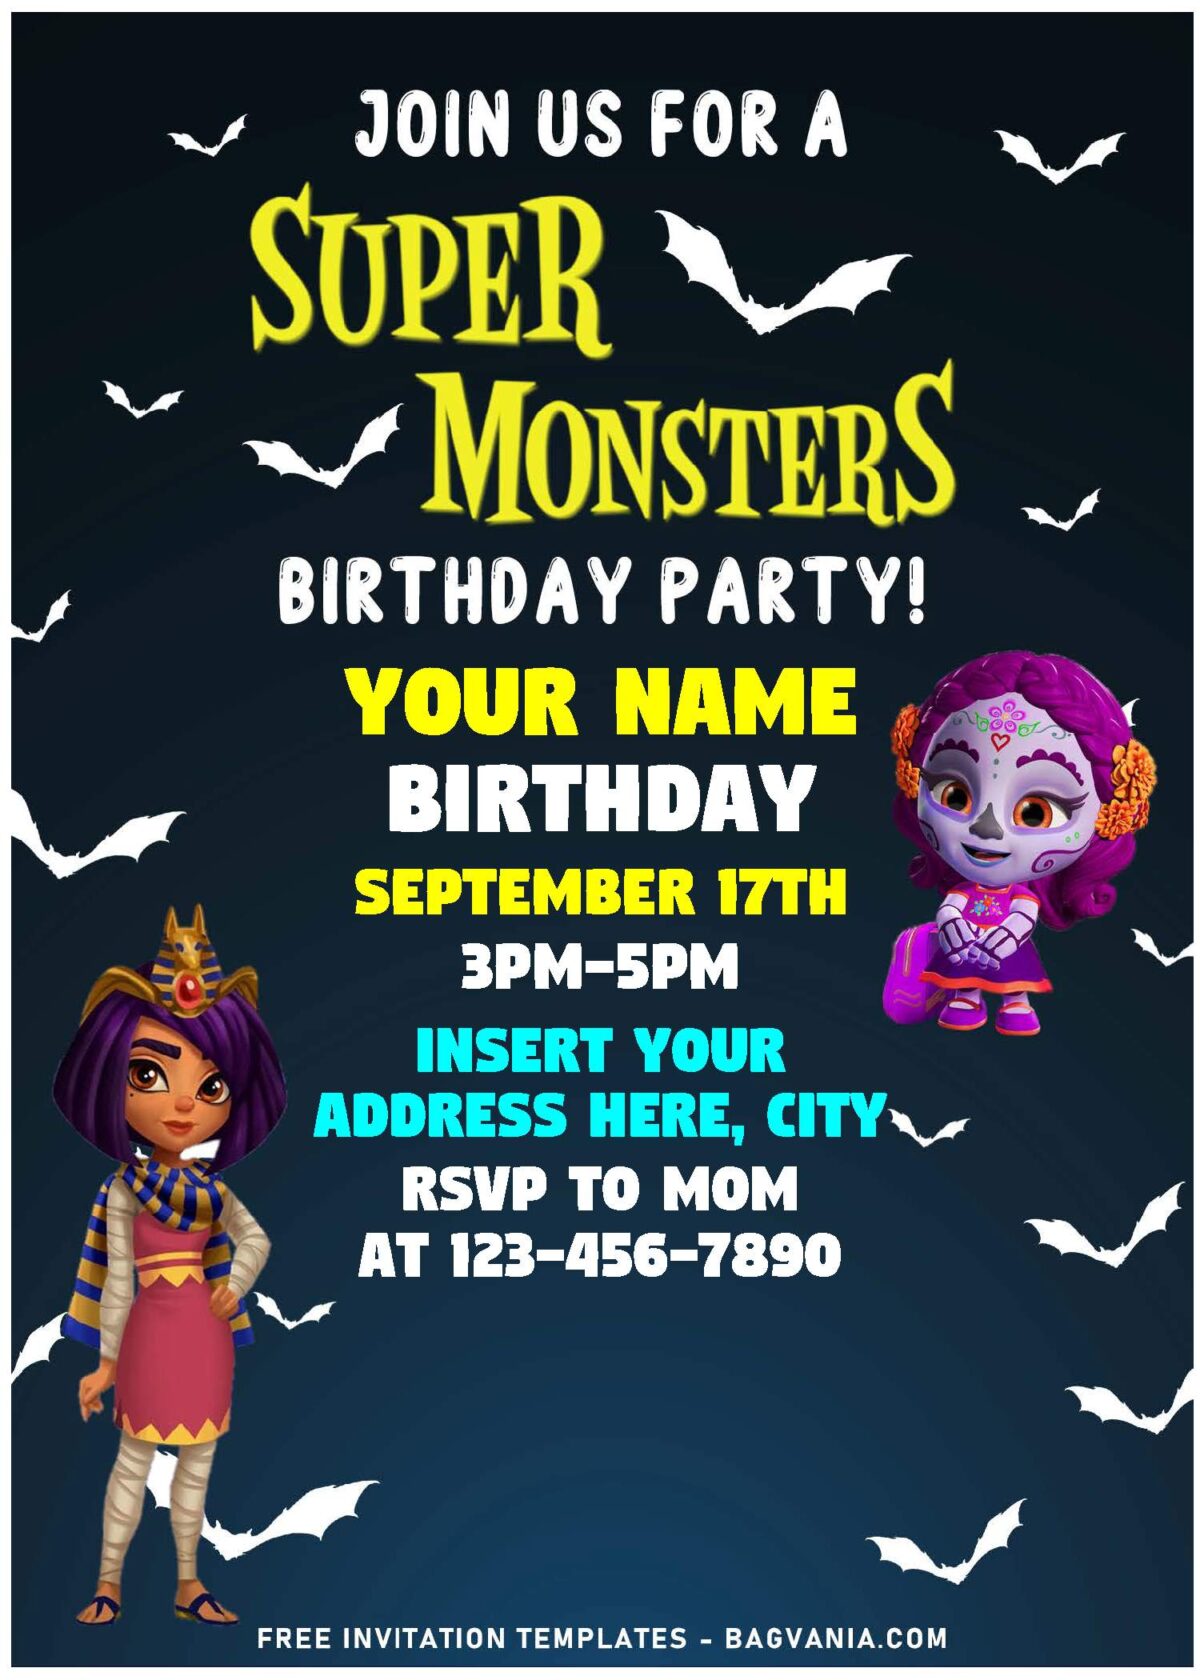 (Free Editable PDF) Spooktacular Super Monster Birthday Invitation Templates